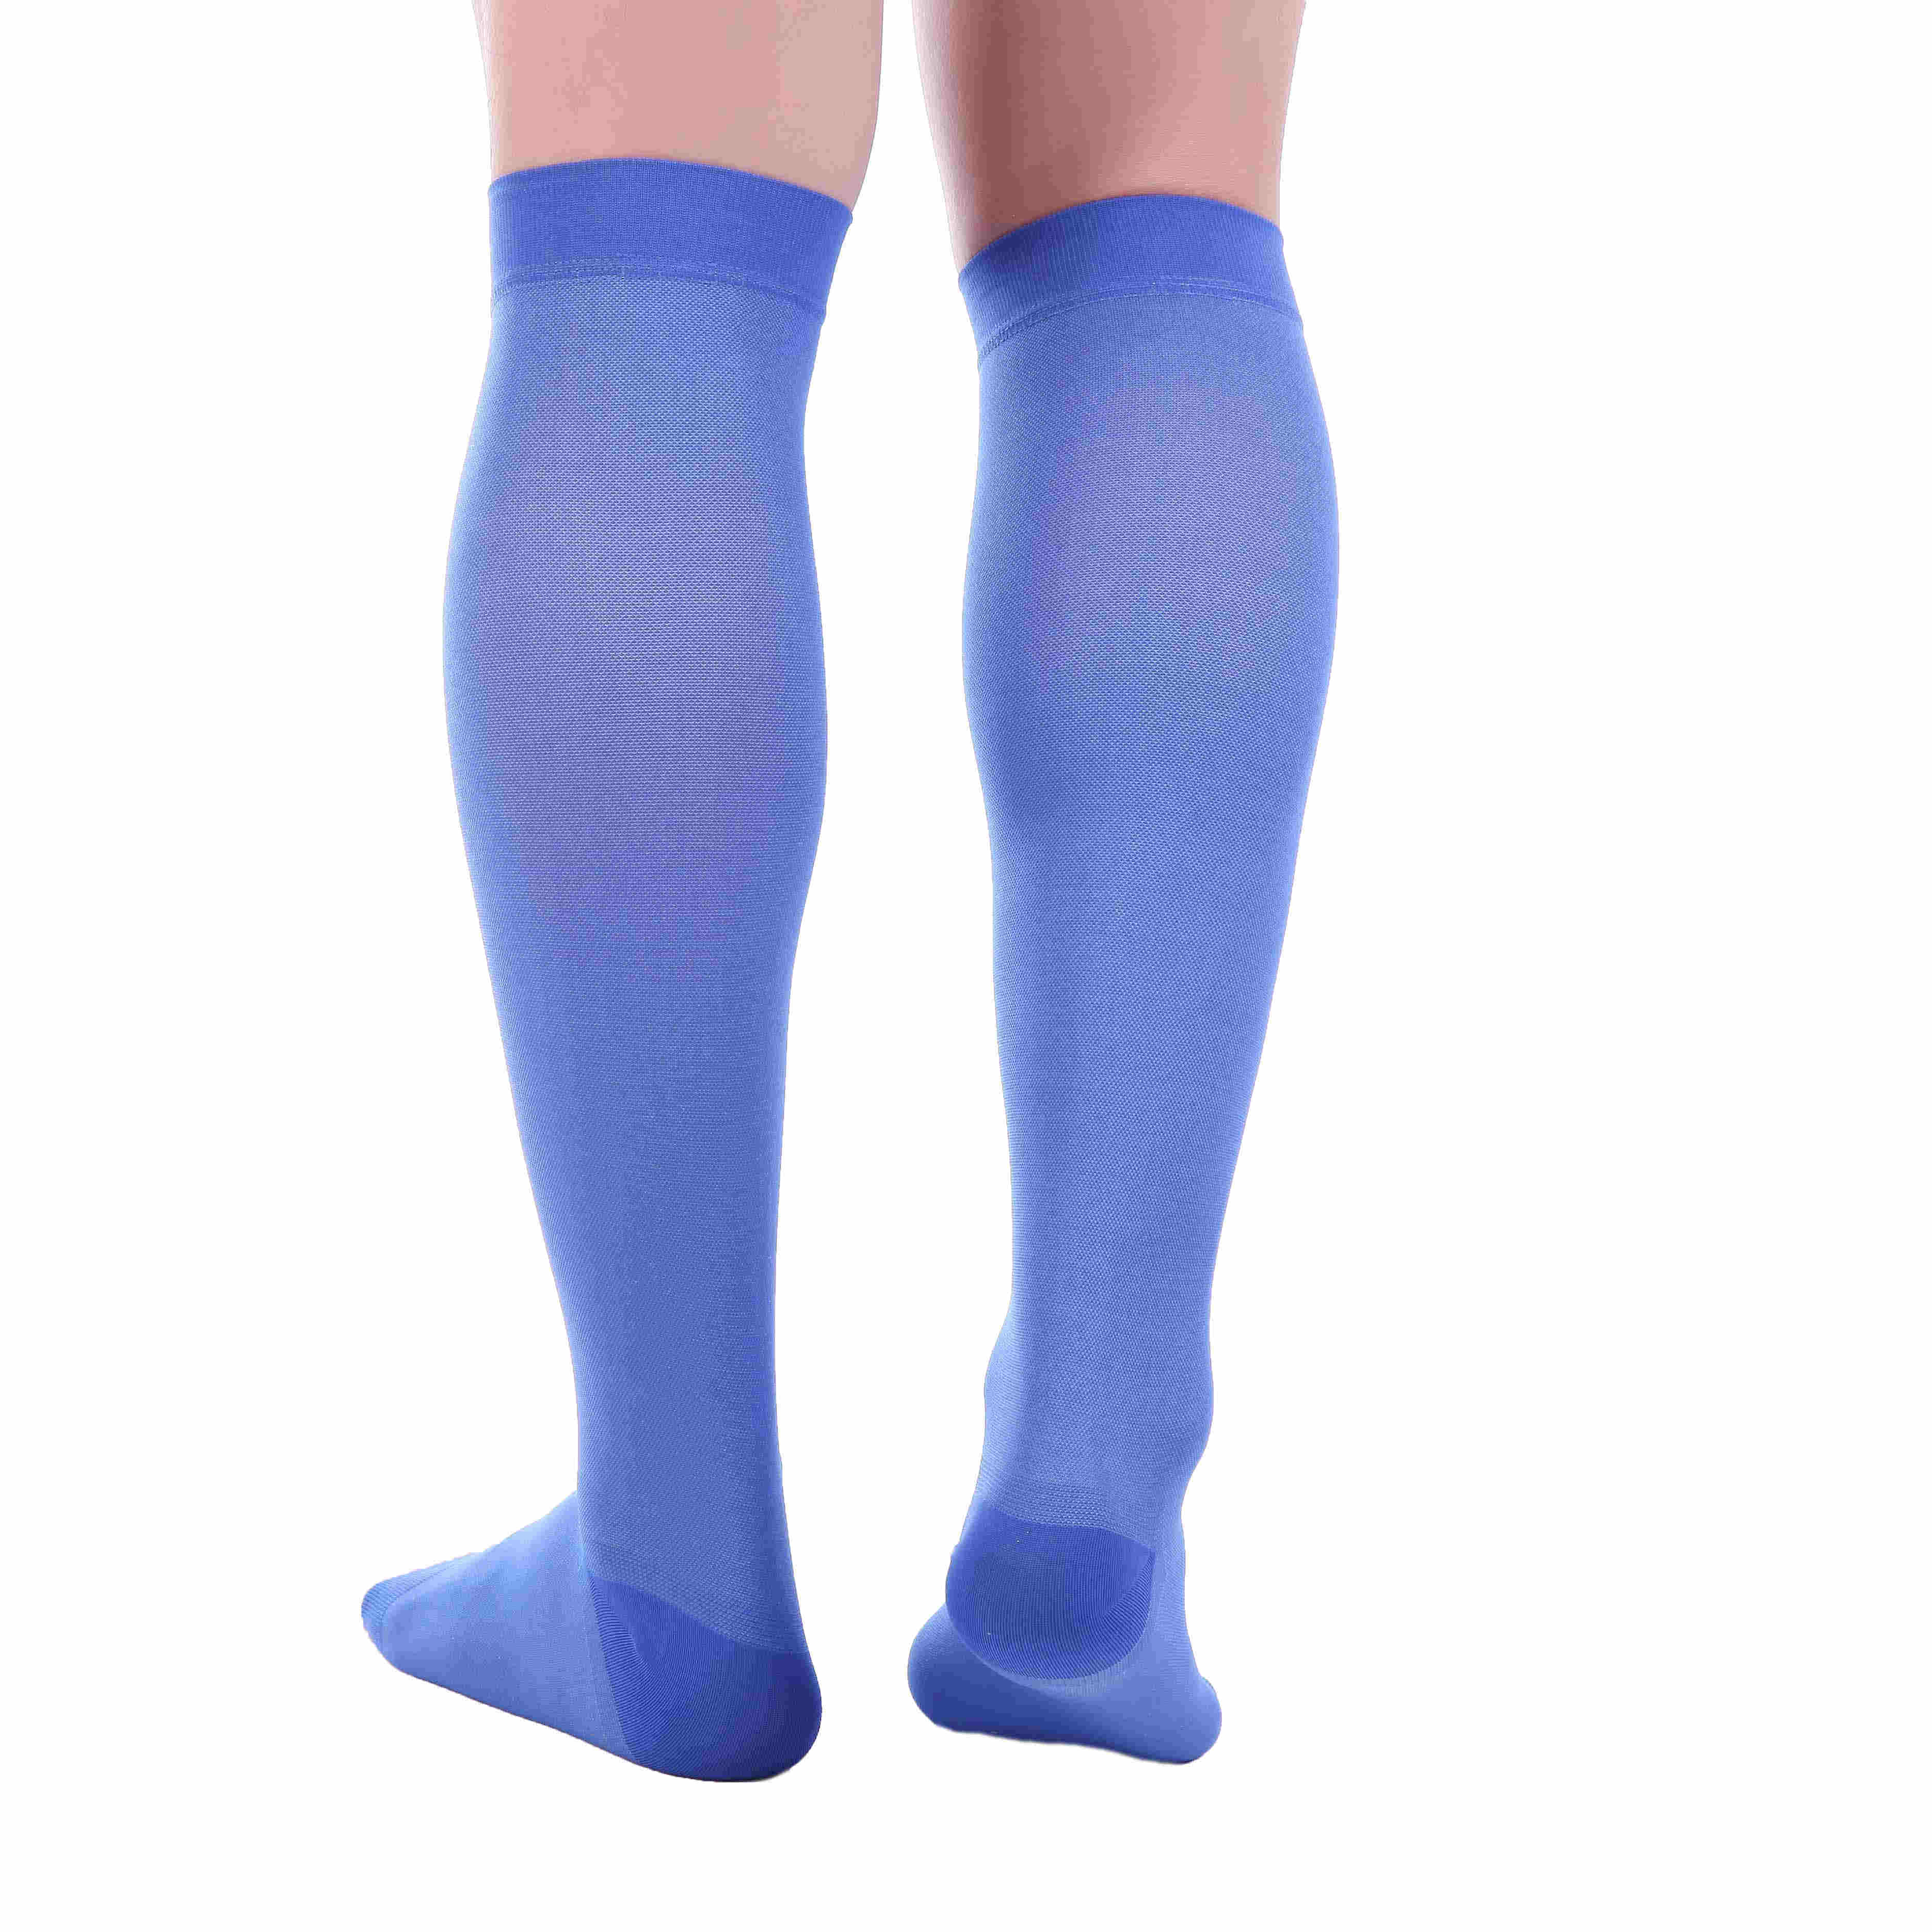 Open Toe Compression Socks 20-30 mmHg BLUE by Doc Miller